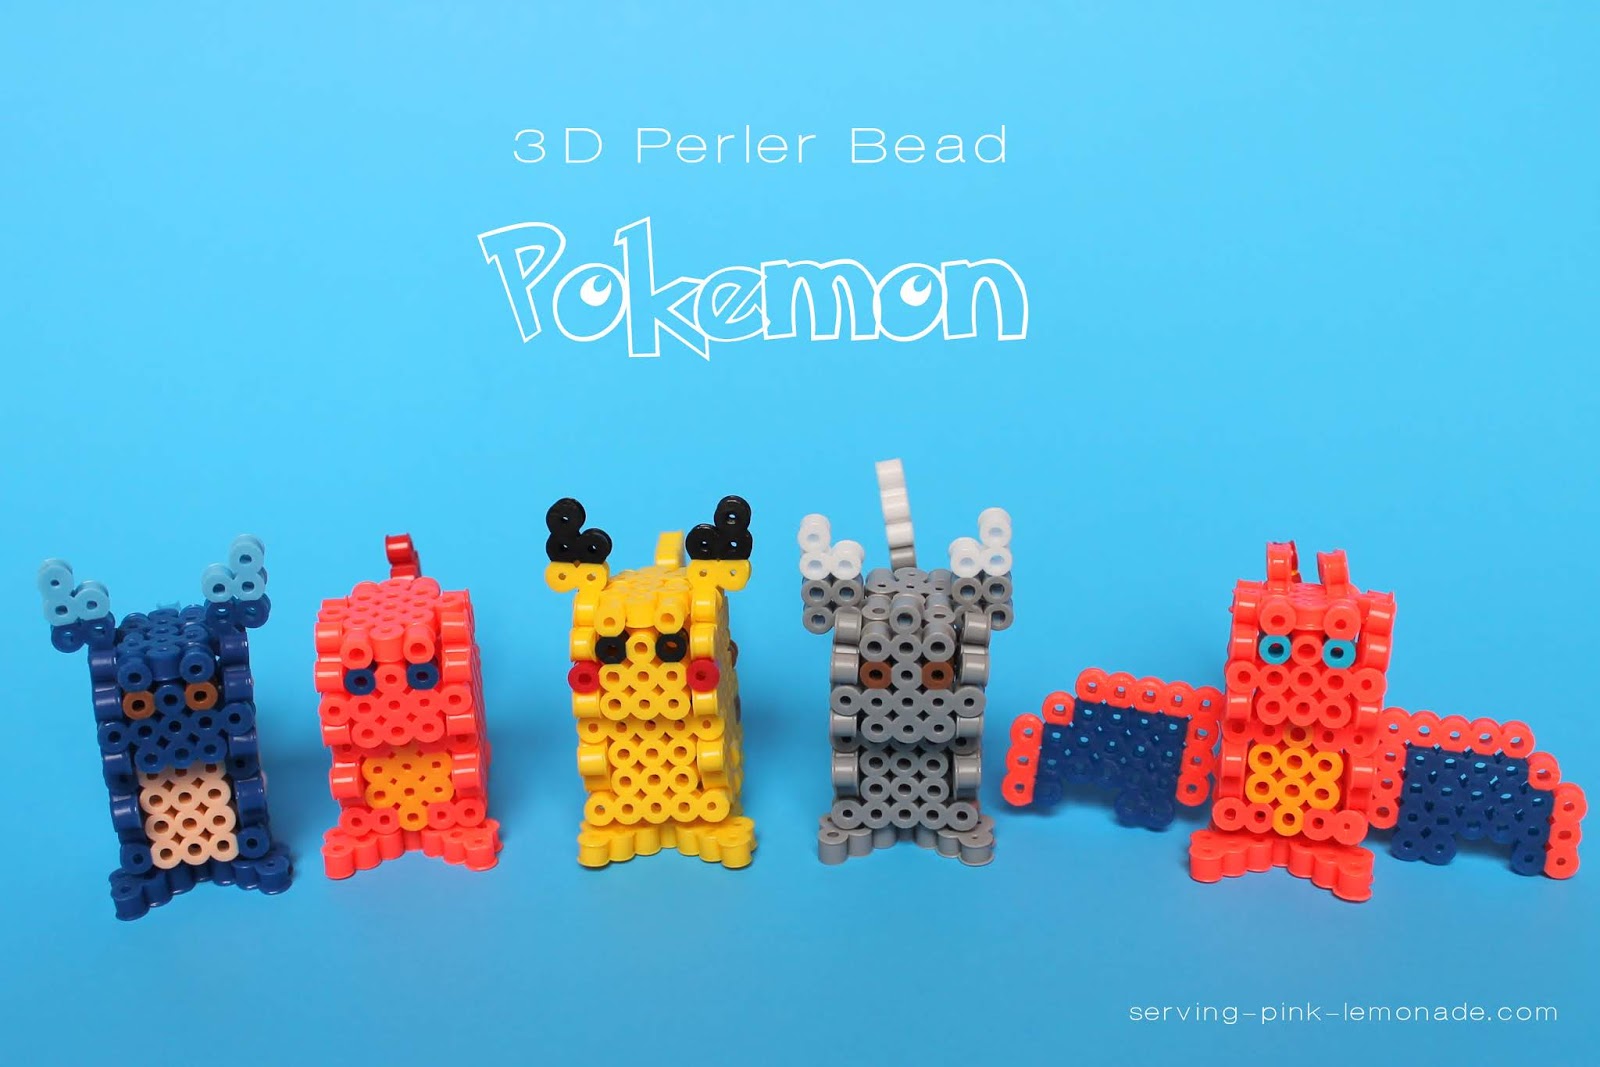 PIKACHU 3D Building Vlog with Mini Perler Beads #3dperler 